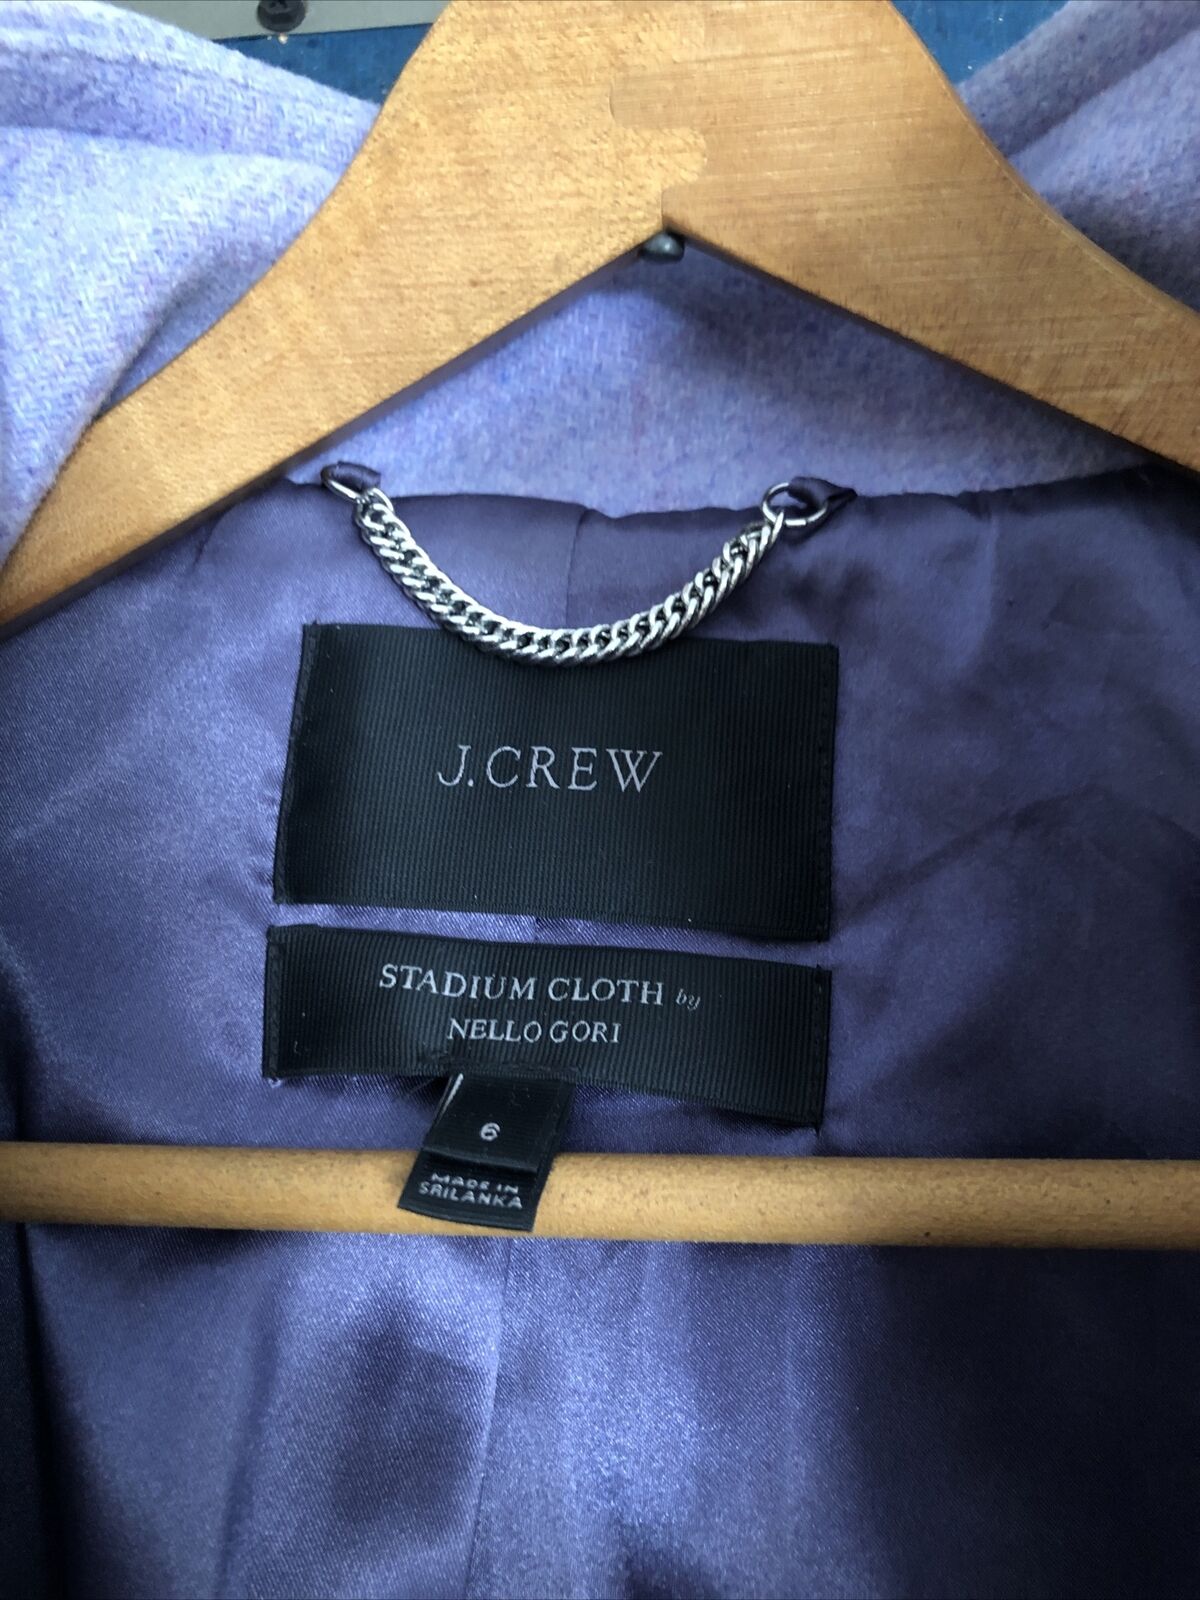 J Crew Stadium Cloth by Nello Gori LILAC Wool Coat Size 6 | eBay